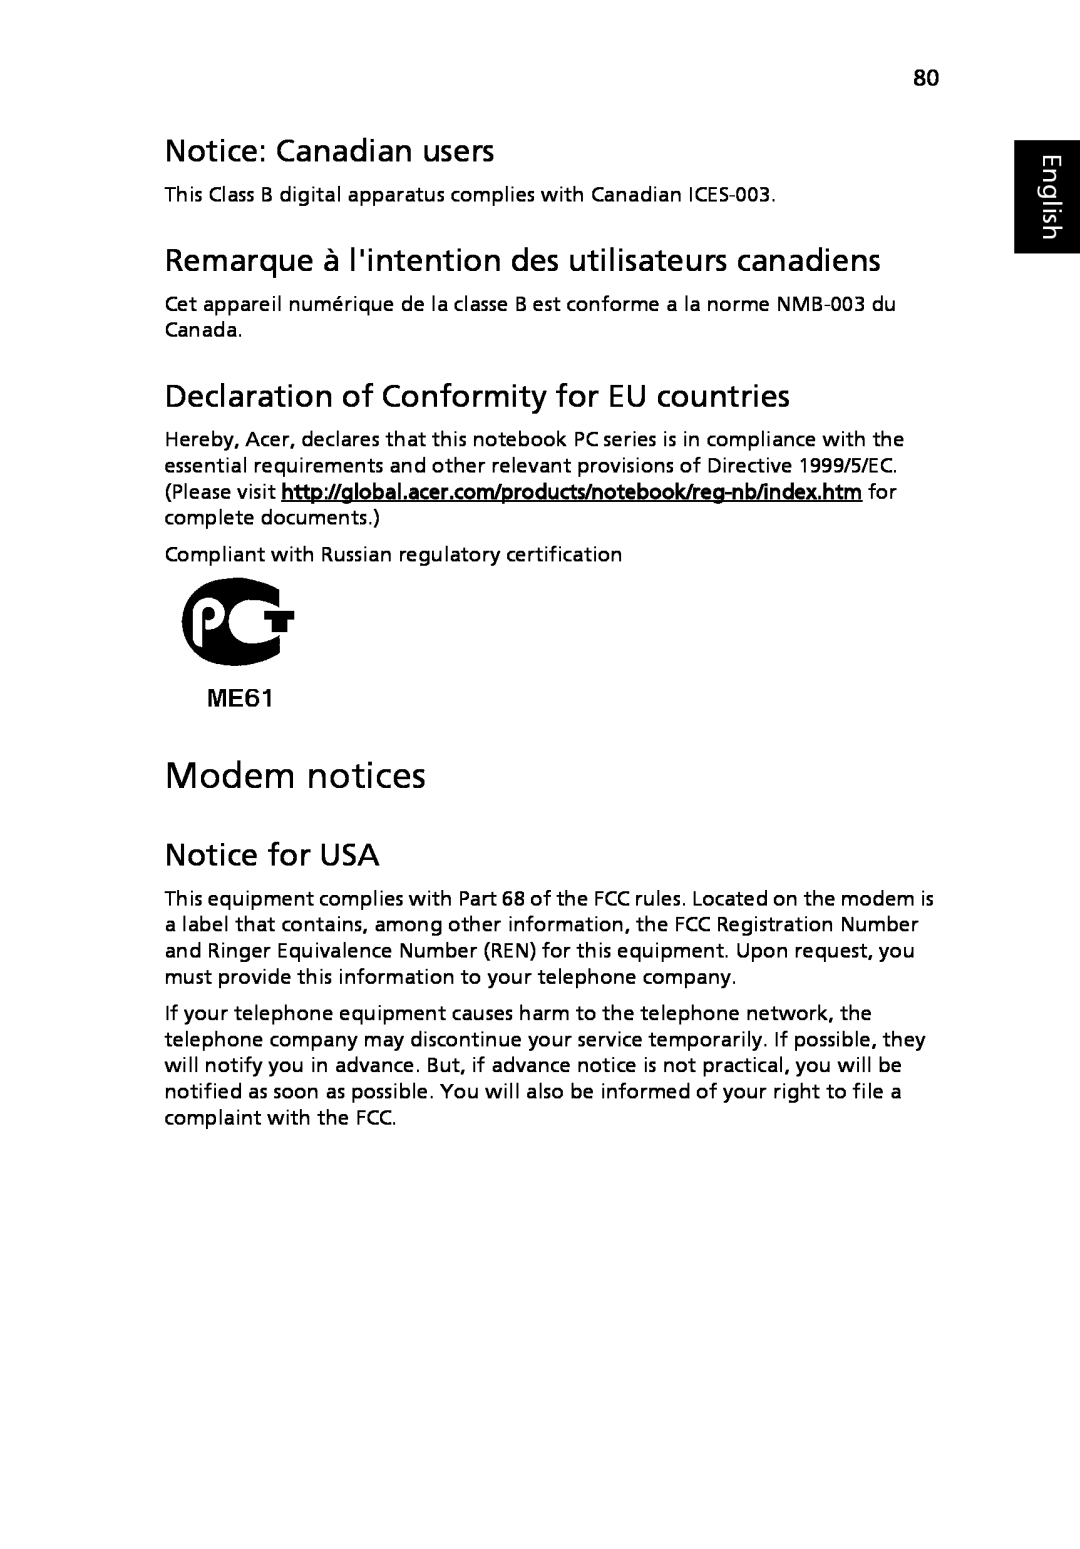 Acer LE1 Modem notices, Notice Canadian users, Remarque à lintention des utilisateurs canadiens, Notice for USA, English 